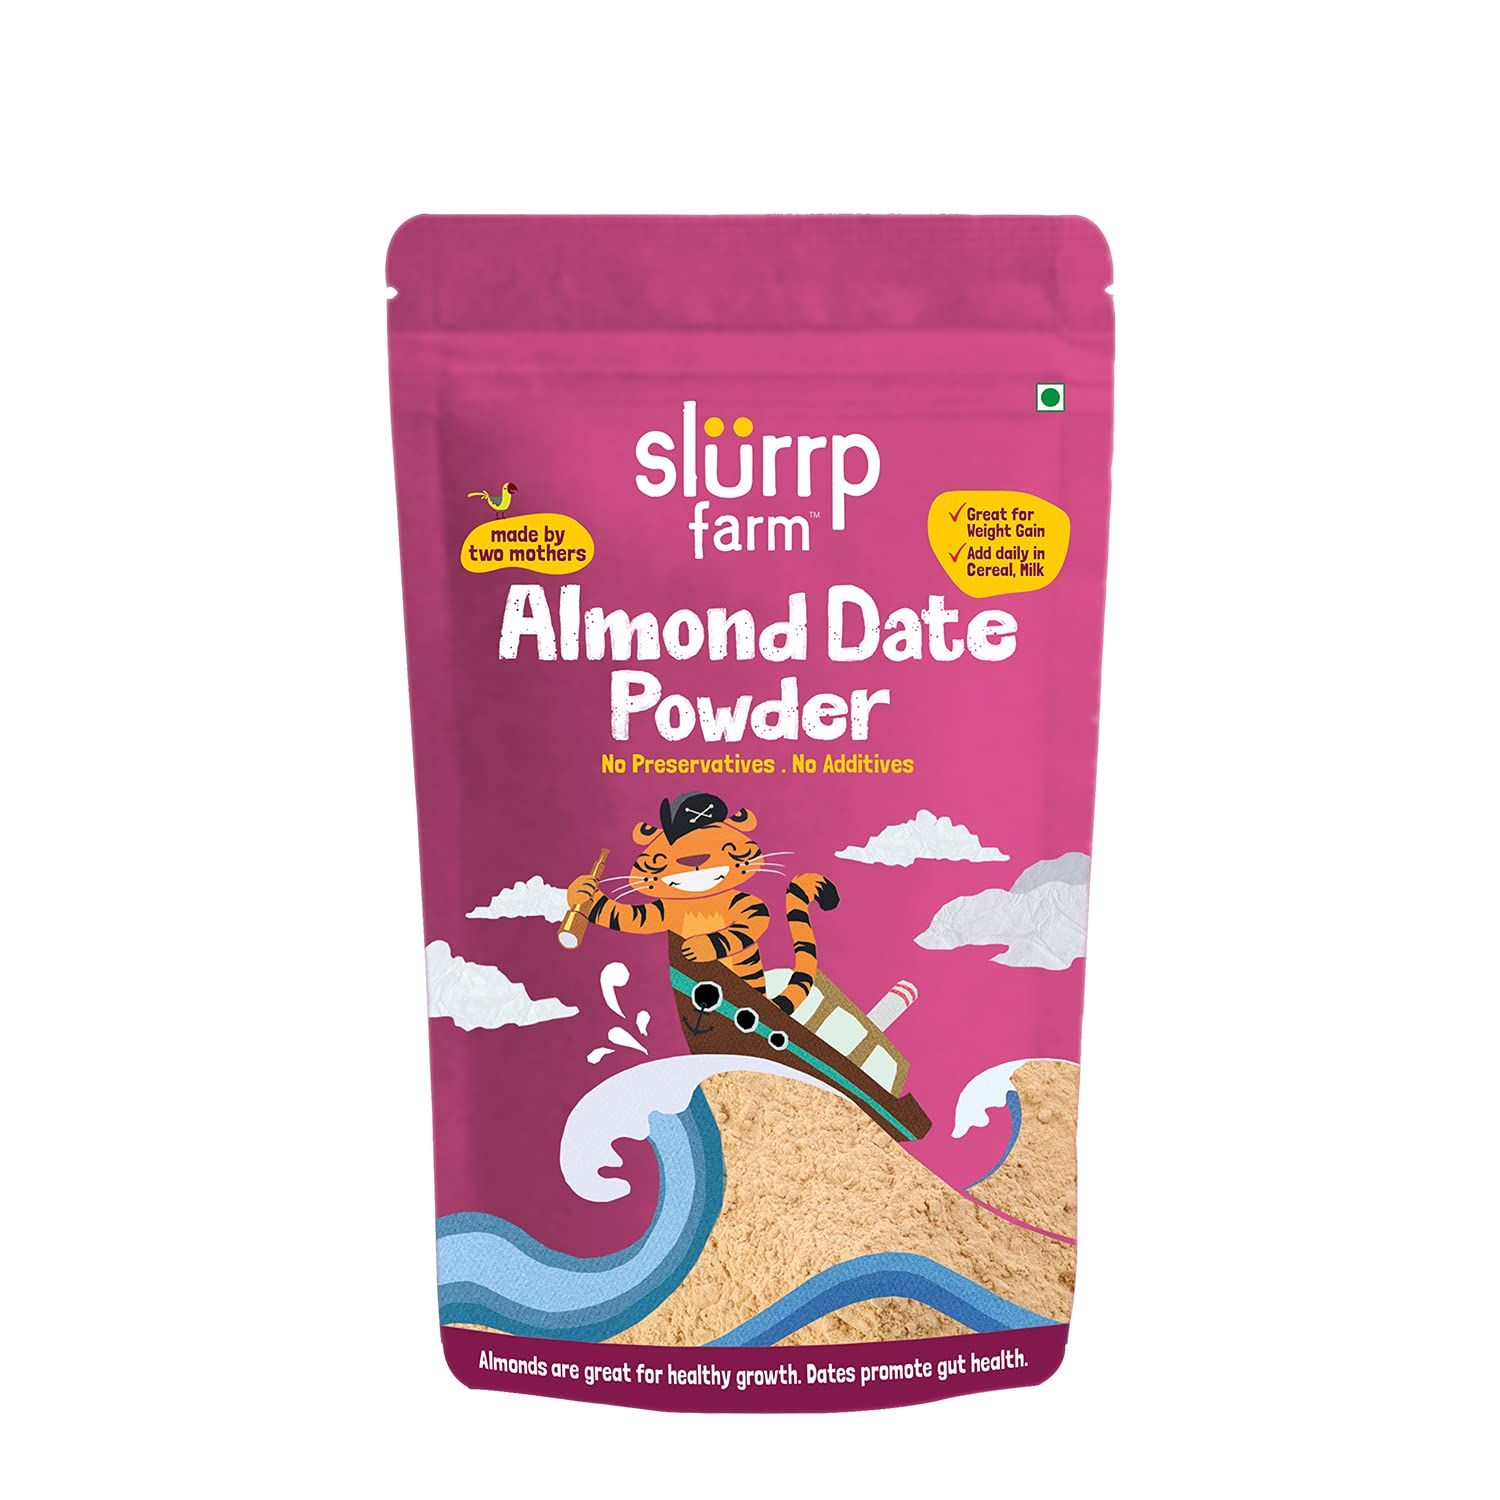 Slurrp Farm Almond Date Powder Image